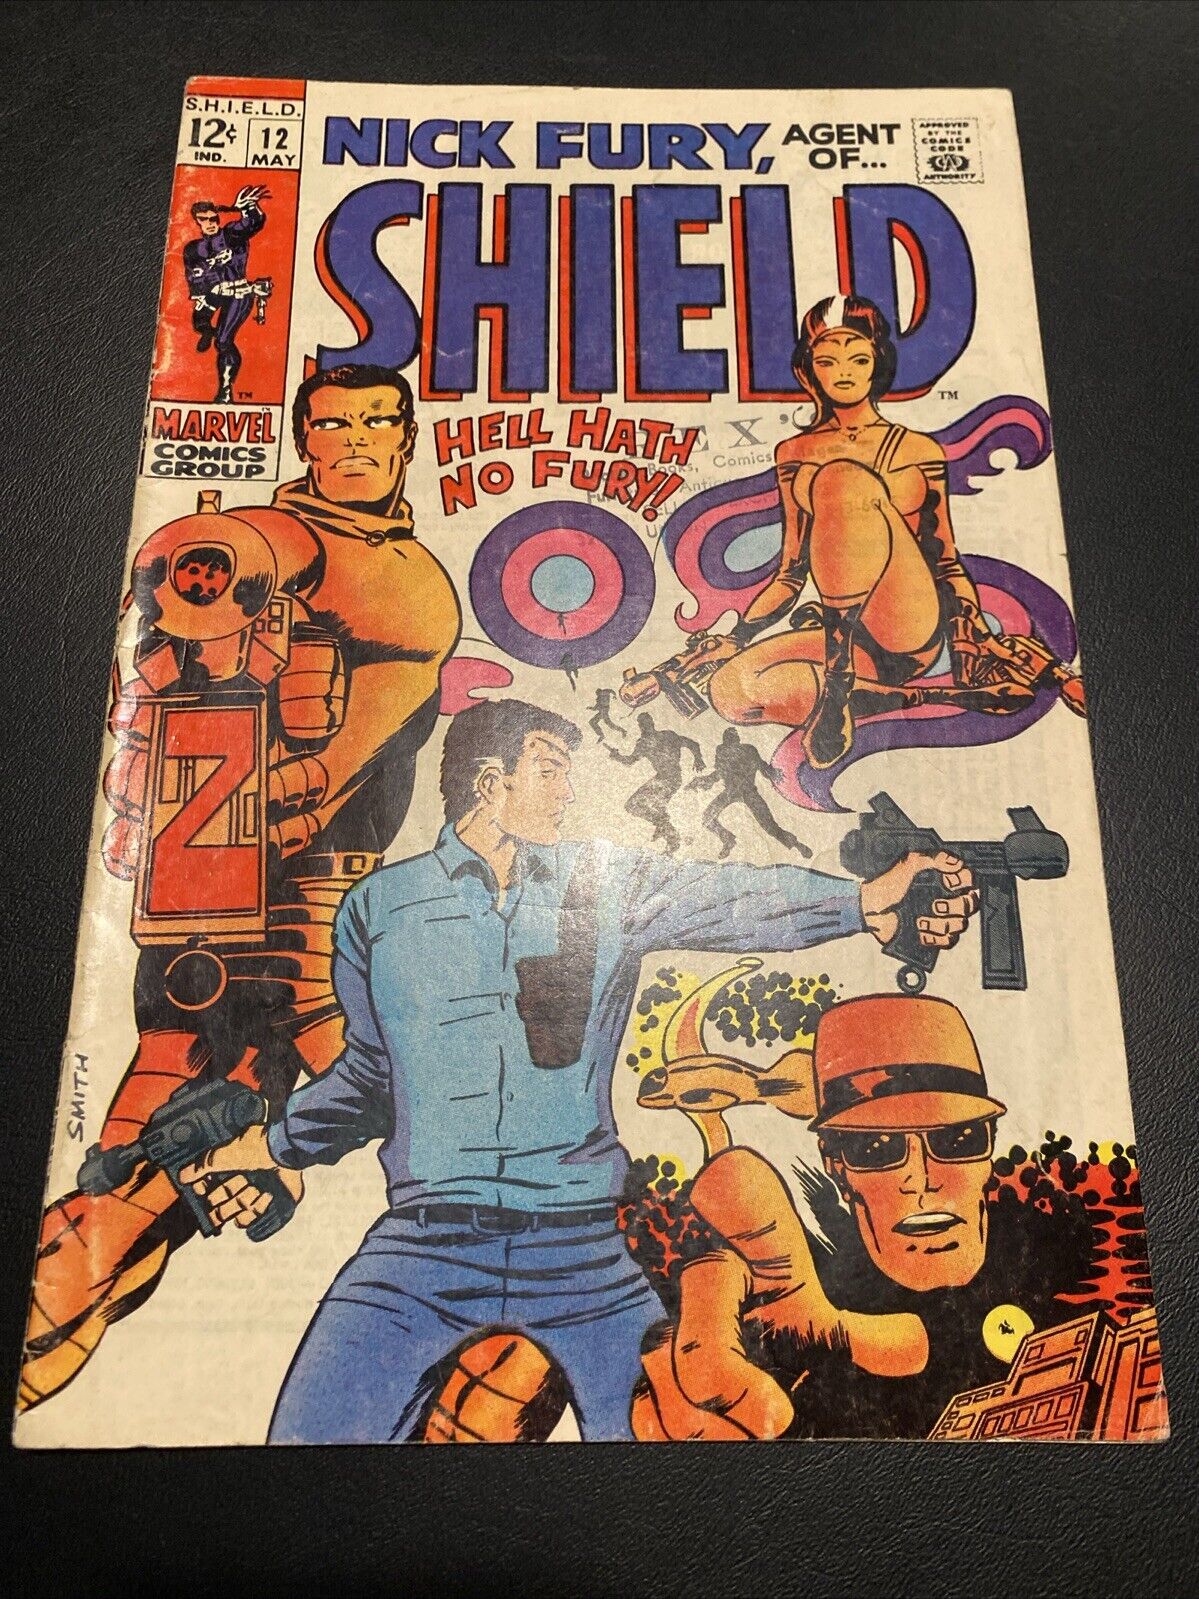 Nick Fury, Agent of Shield #12 (Marvel Comics May 1969)